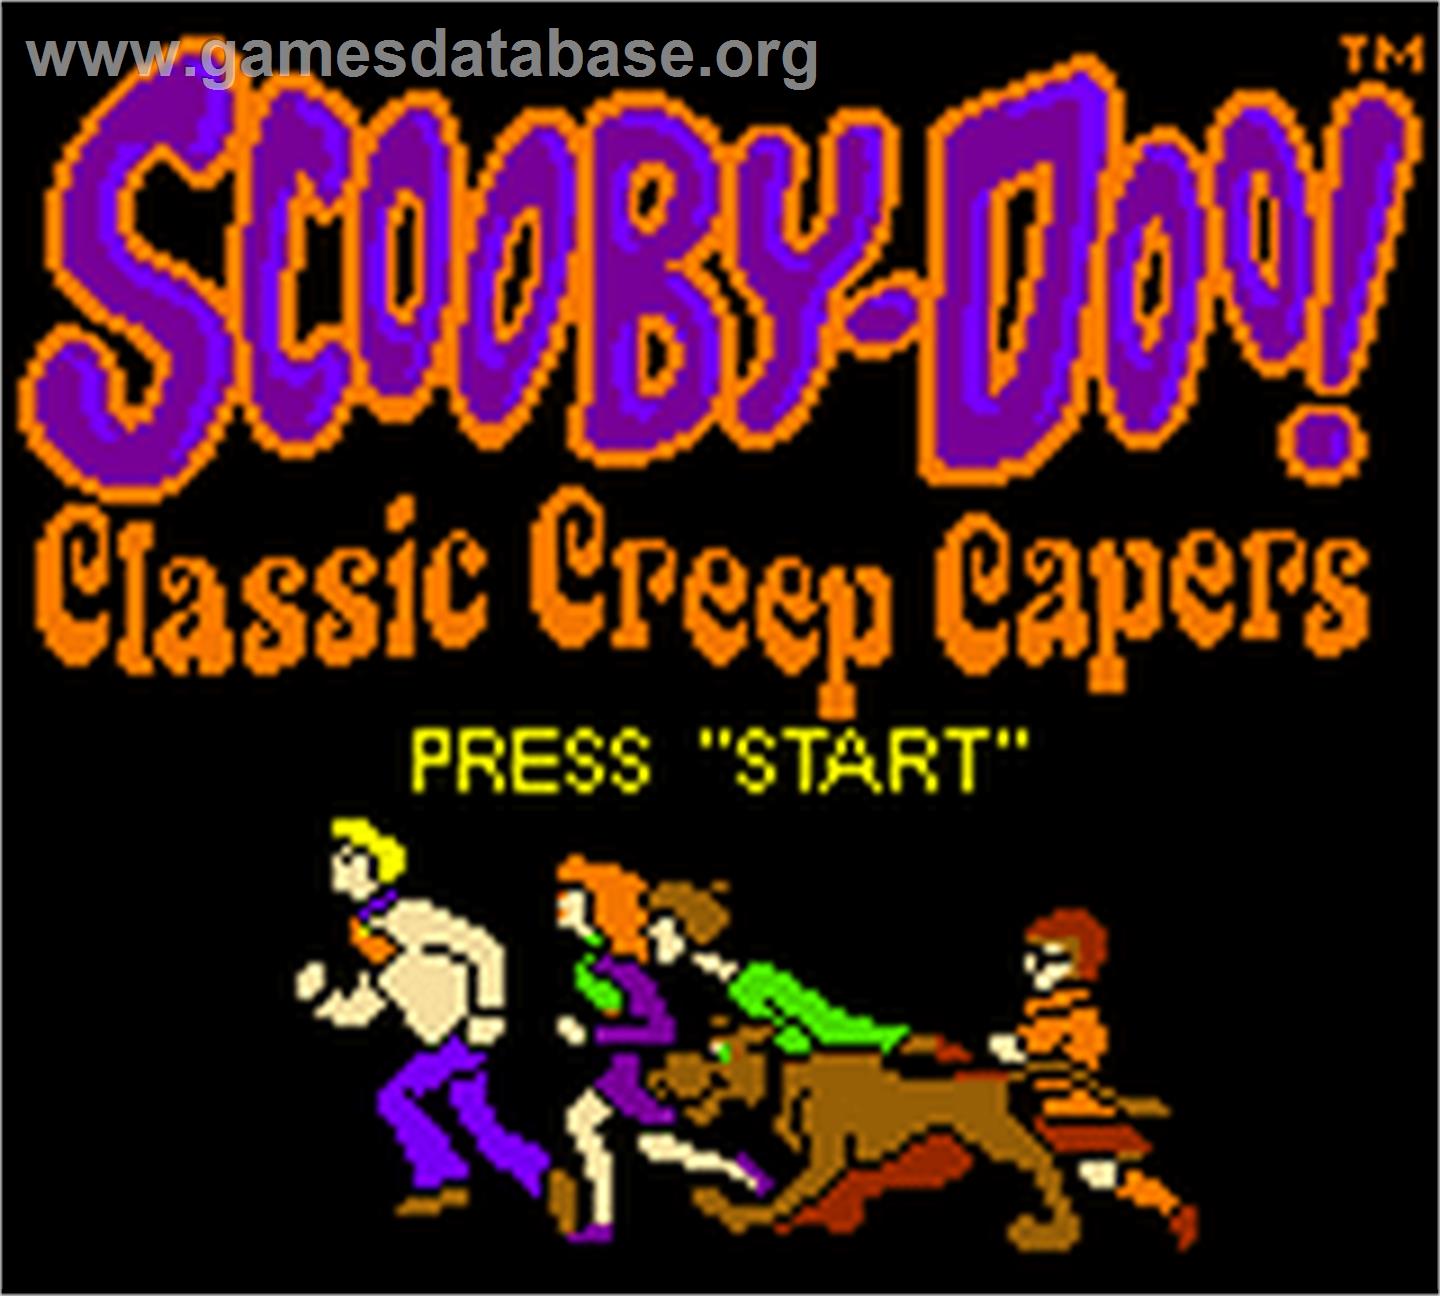 Scooby Doo! Classic Creep Capers - Nintendo Game Boy Color - Artwork - Title Screen